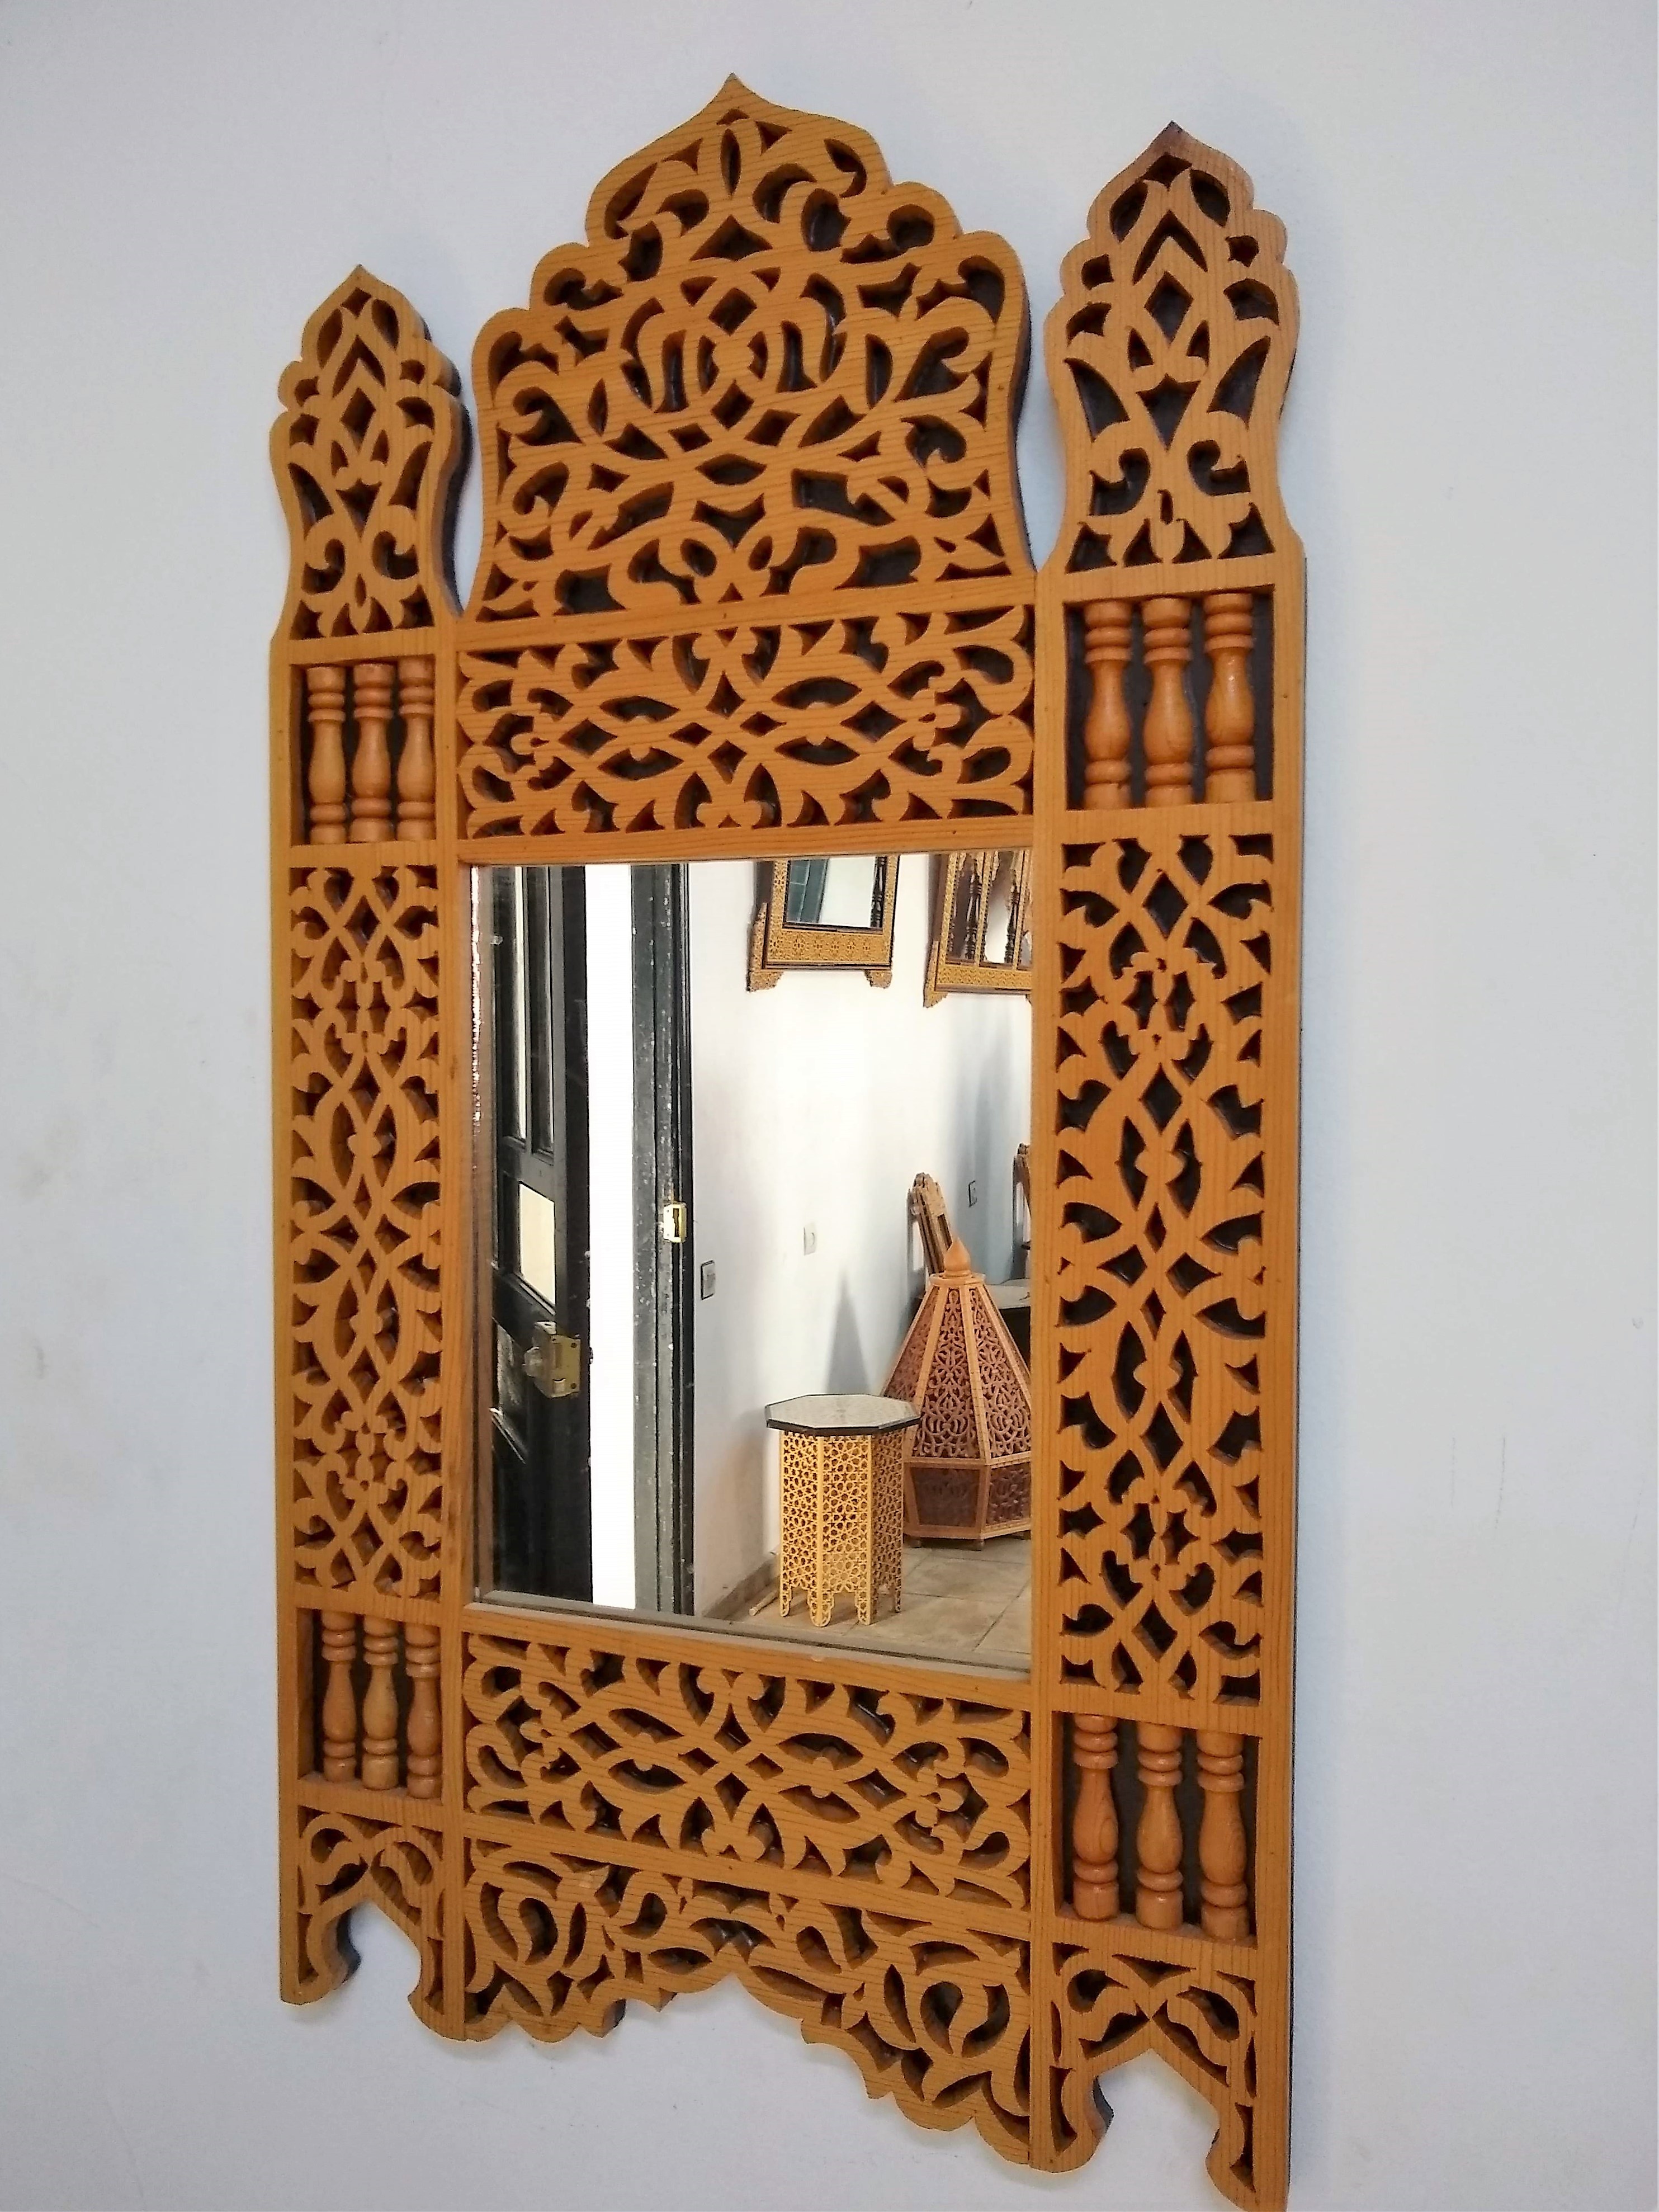 Beautiful wood cutout mirror at Dar Sanaa Traditional Arts School in Tetouan, Morocco